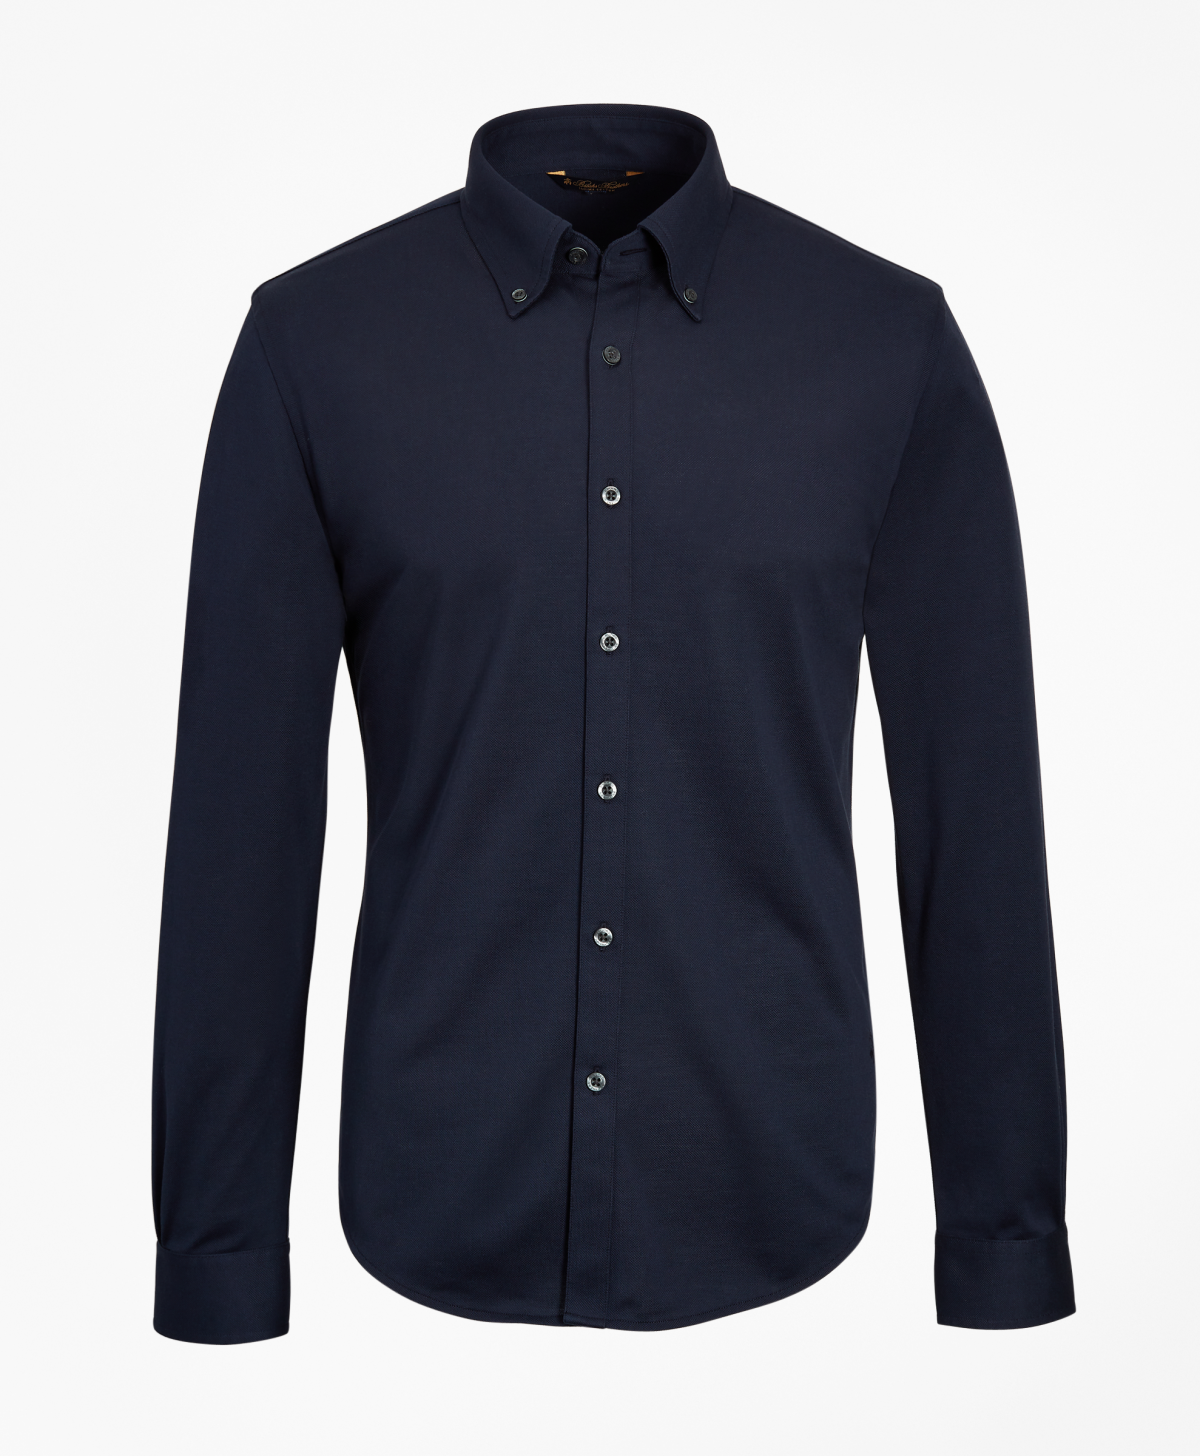 Premium Extra-Fine Supima Cotton Pique Button-Down Shirt